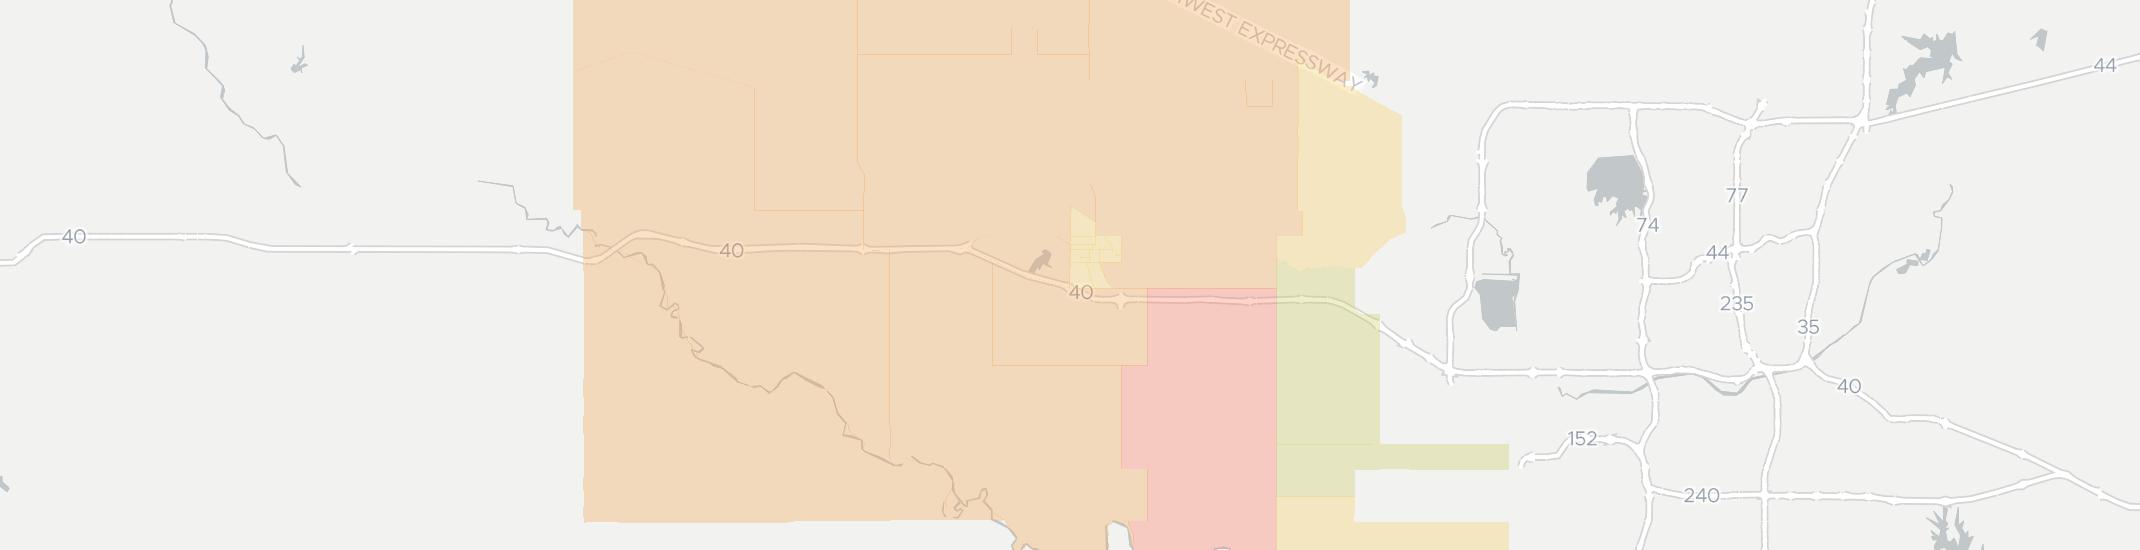 El Reno Internet Competition Map. Click for interactive map.